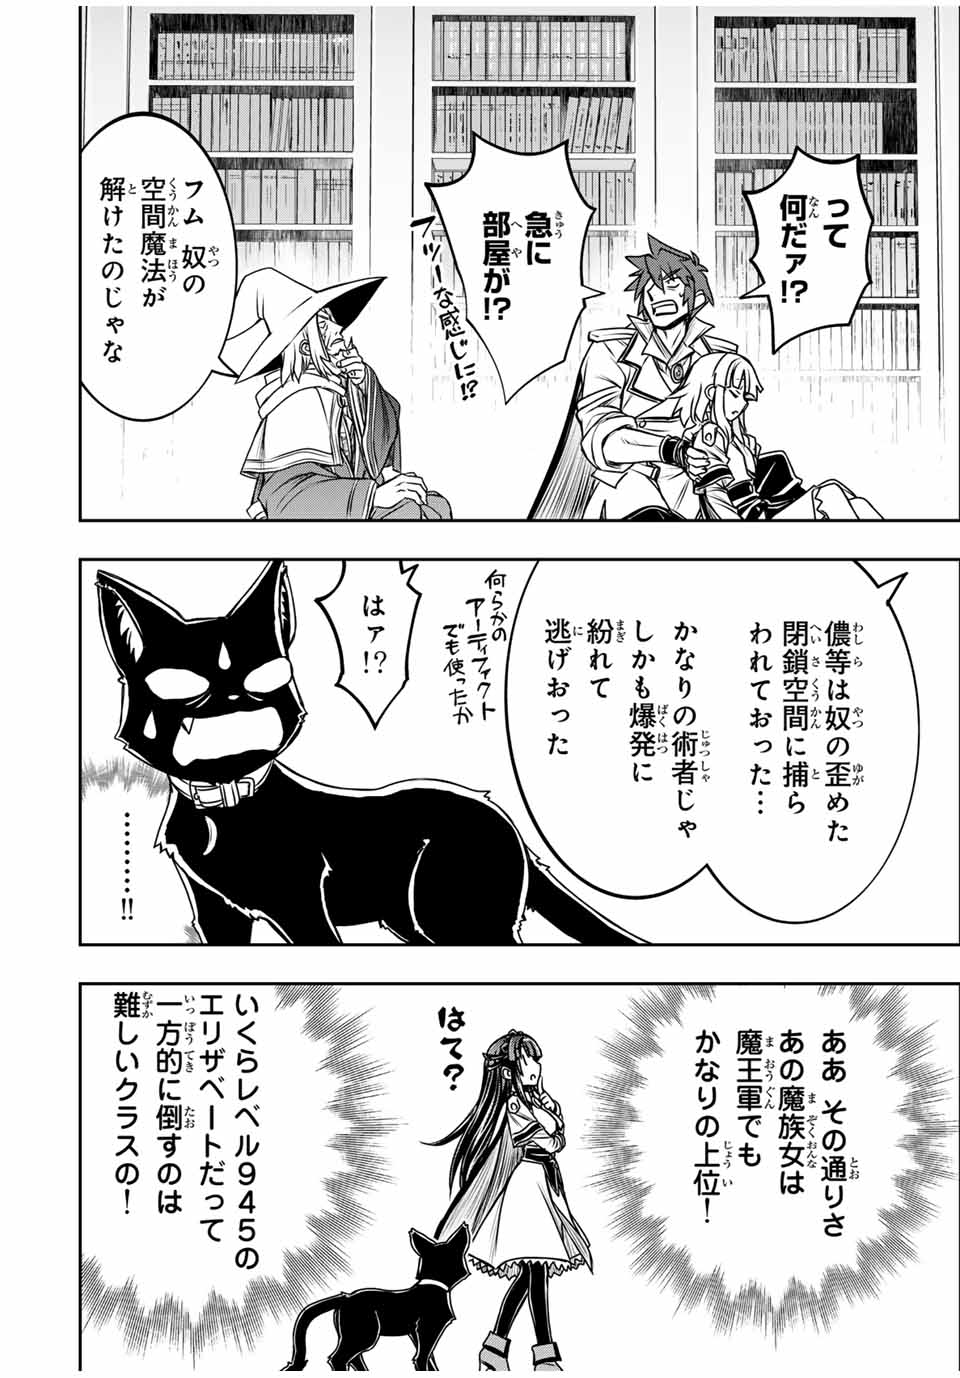 Nengan no Akuyaku Reijou (Last Boss) no Karada wo Teniiretazo!  - Chapter 27 - Page 18